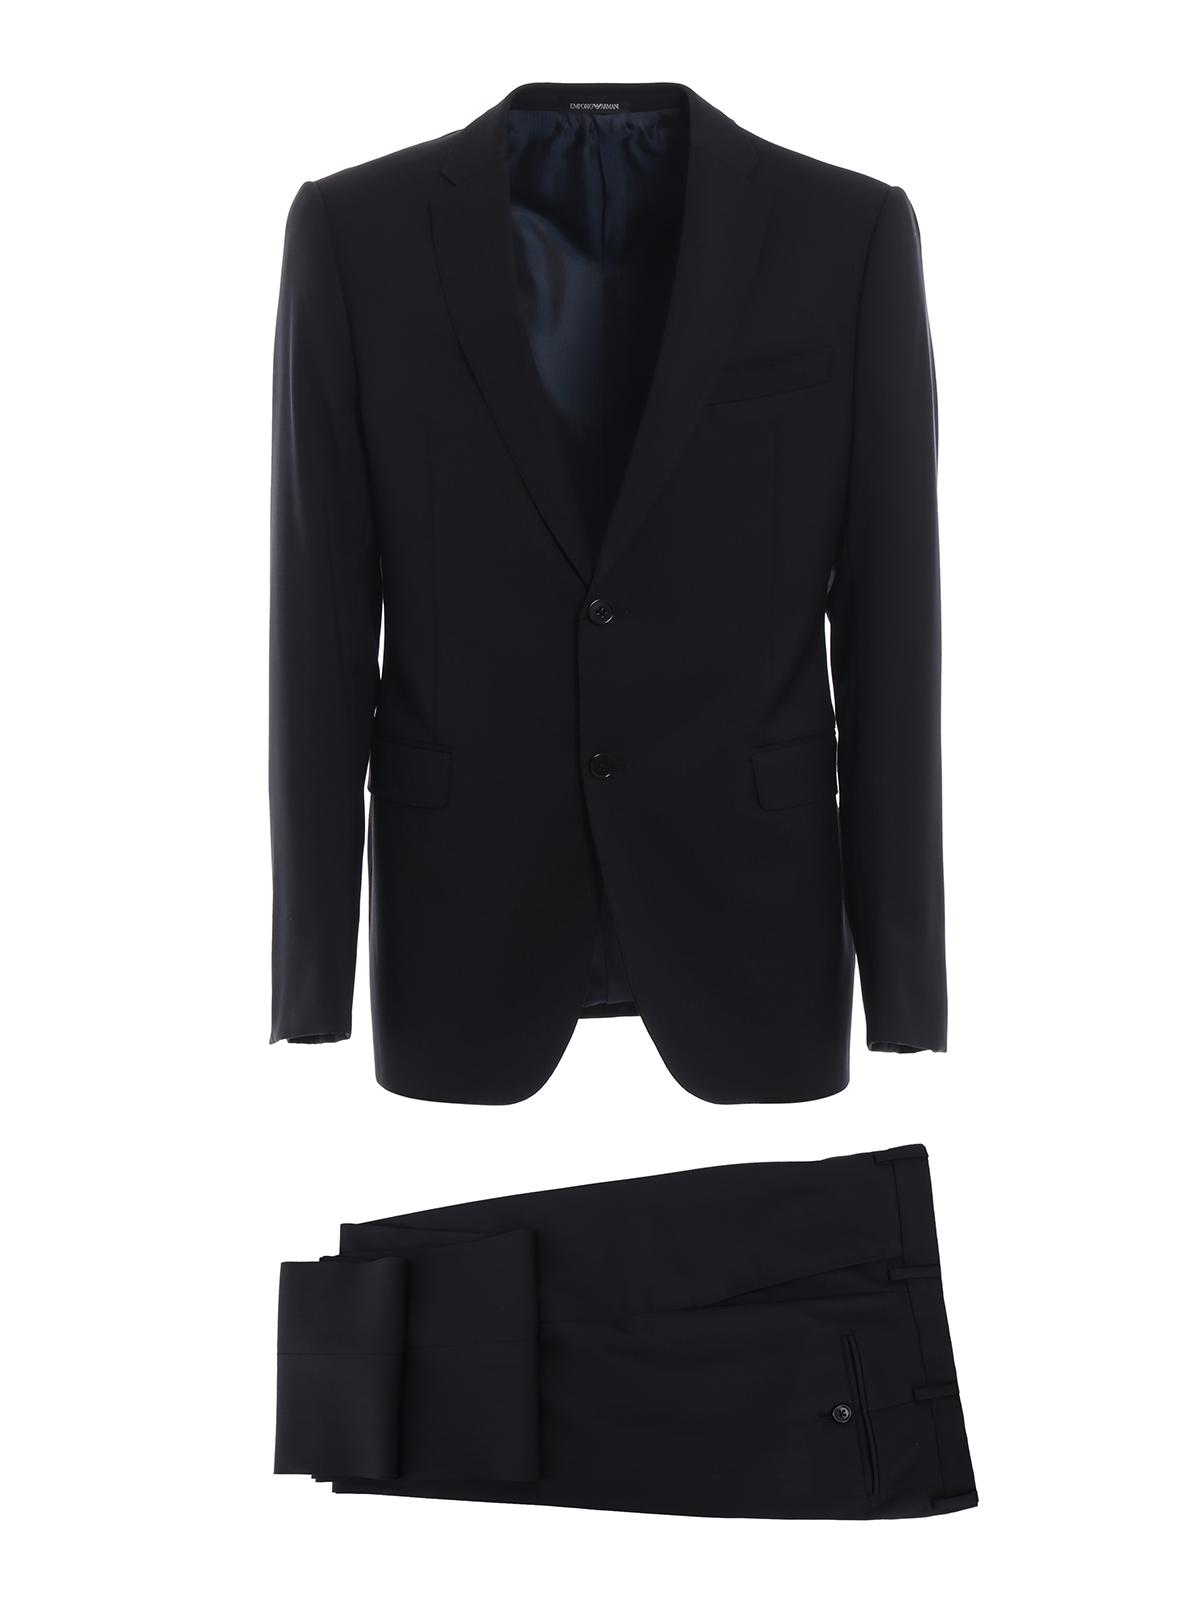 Emporio Armani Dark Grey Wool Suit in Gray for Men - Lyst